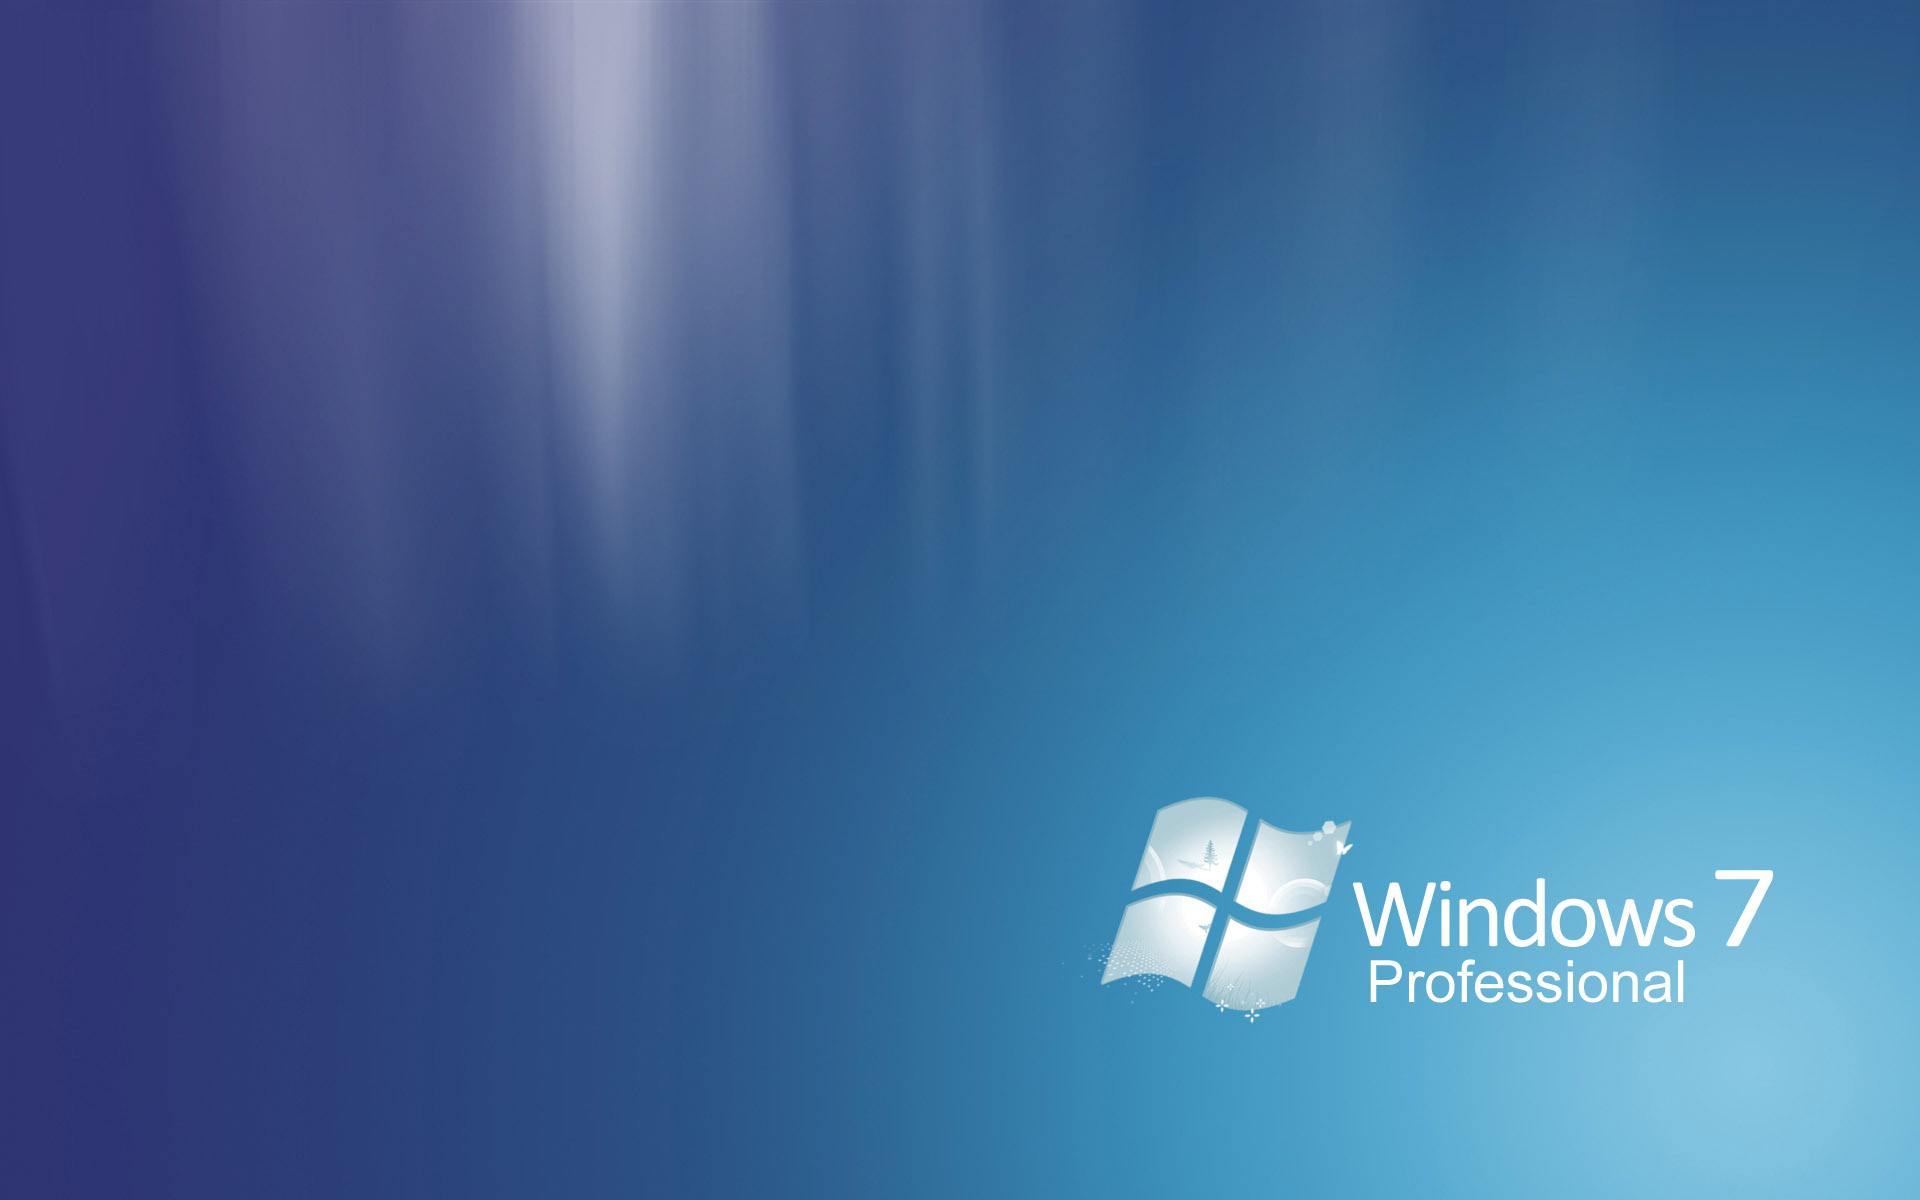 Windows 7 Wallpapers Pack Wallpapers Inbox